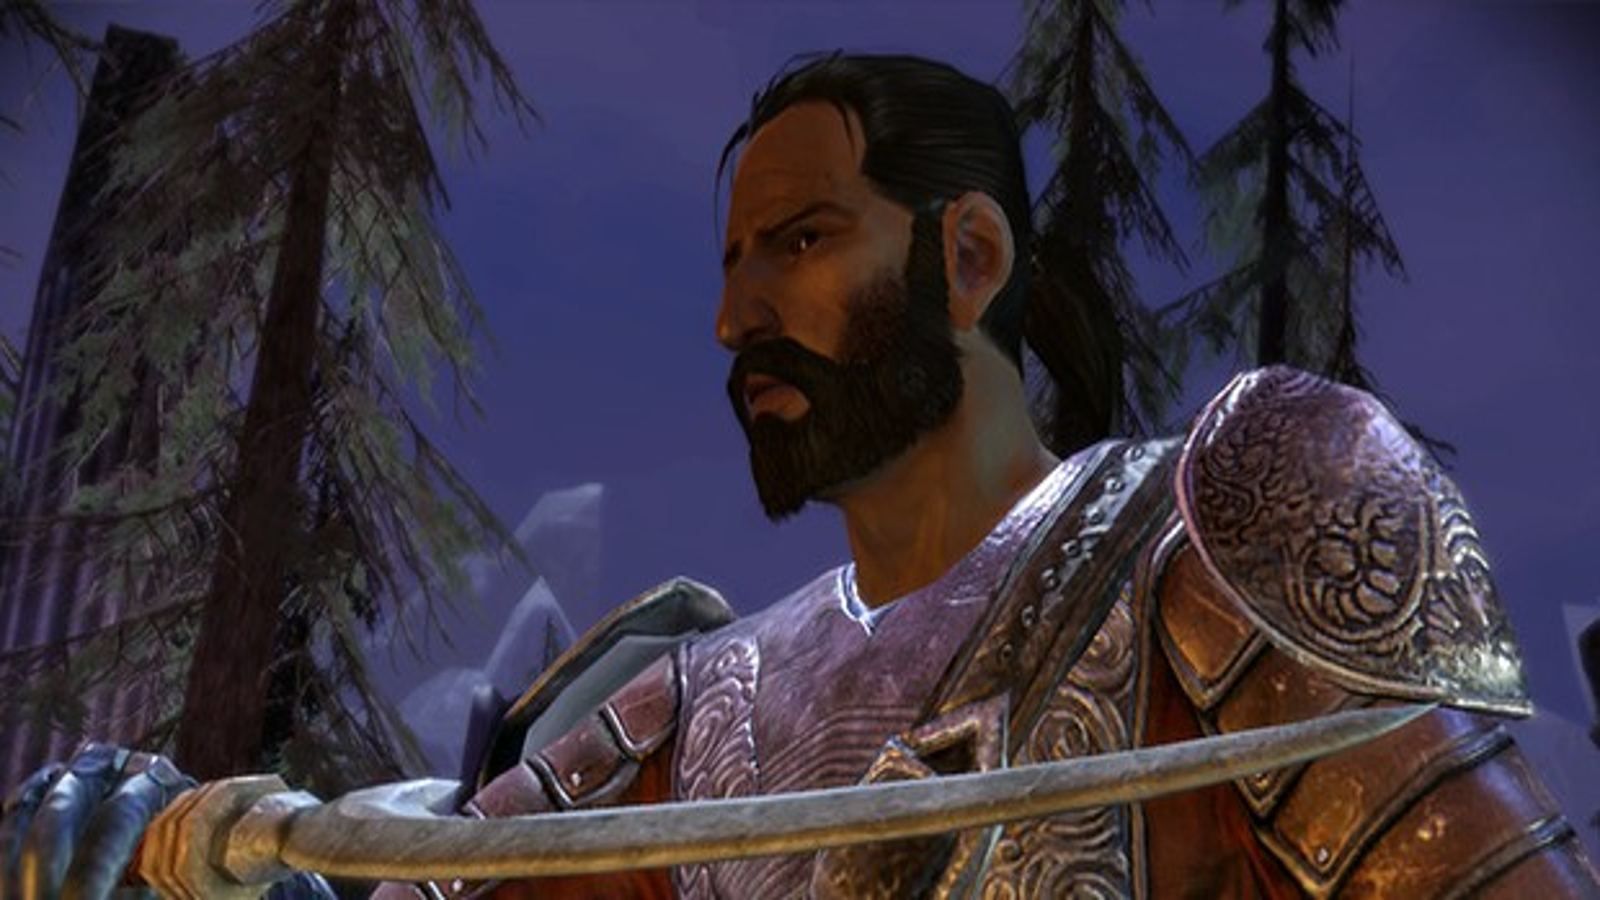 Dragon Age: Origins now free on Origin, naturally